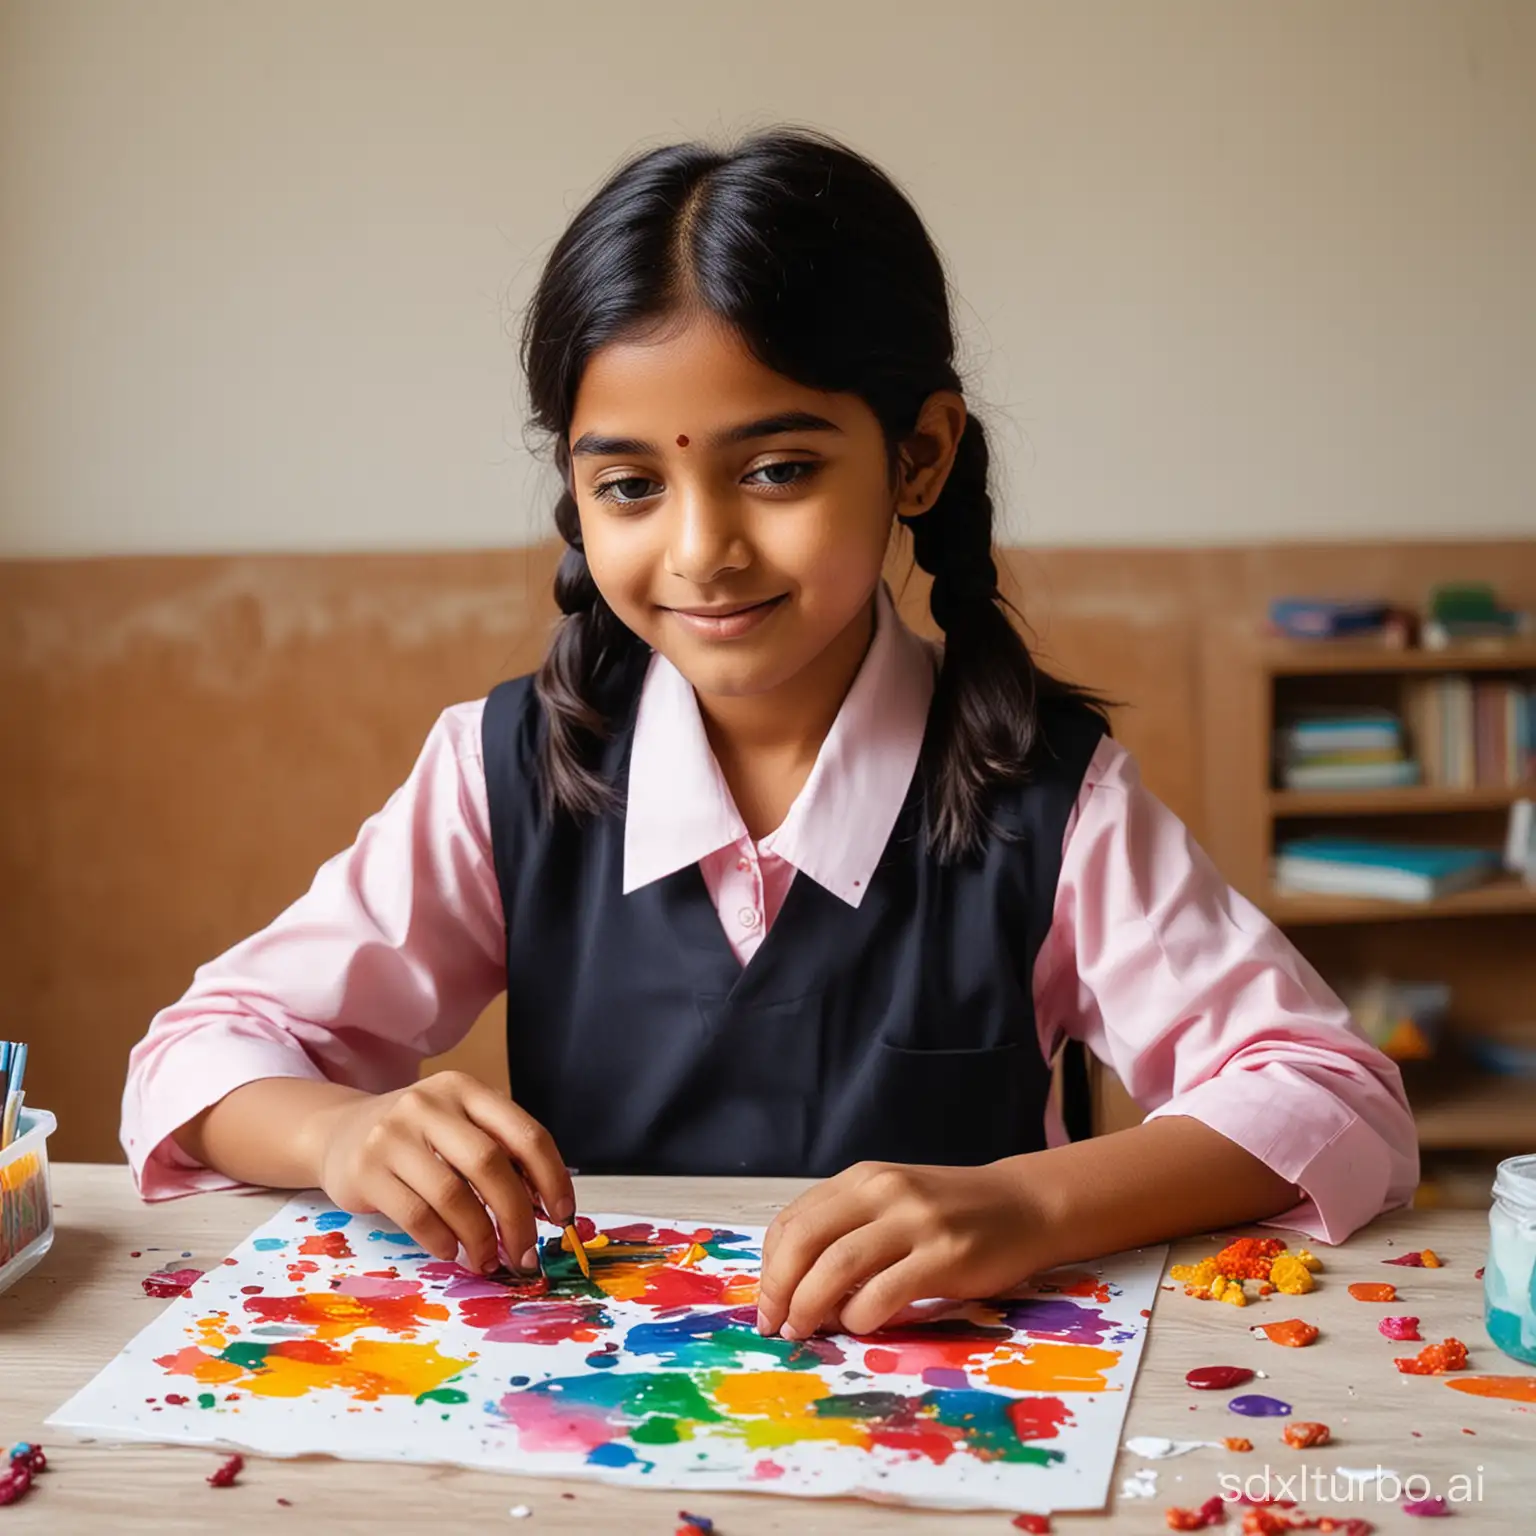 Adorable-Indian-Schoolgirl-Creating-Vibrant-Resin-Art